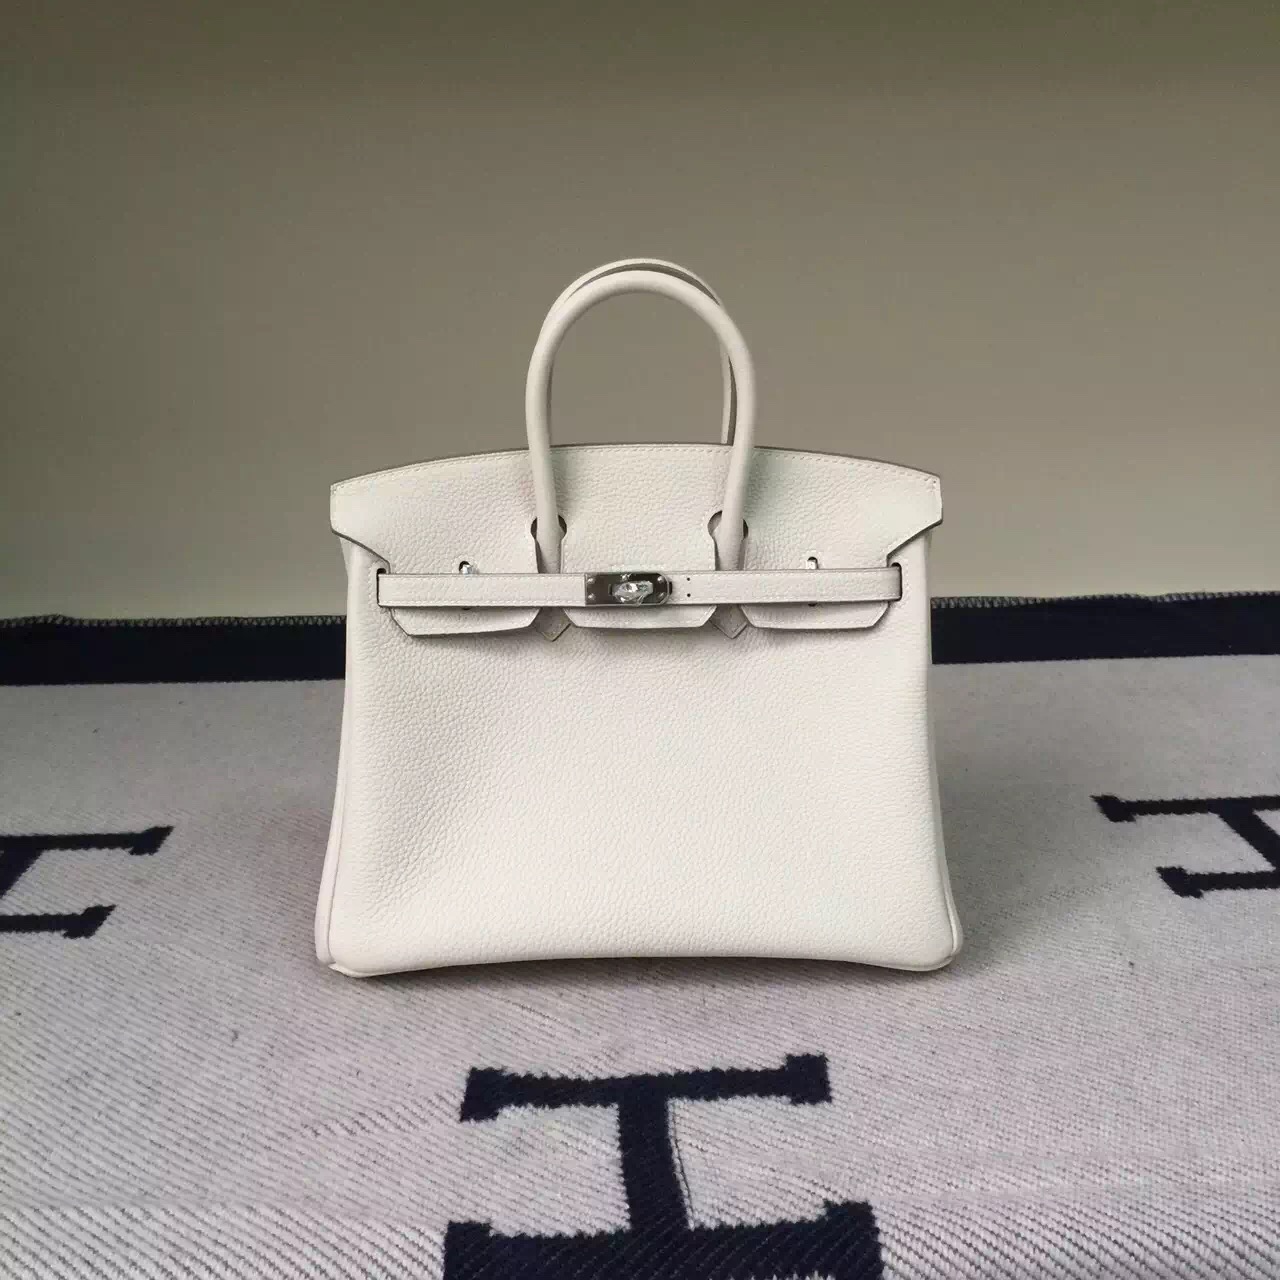 New Women&#8217;s Bag Hermes Togo Leather Birkin Bag 25cm in CK10 Milk White